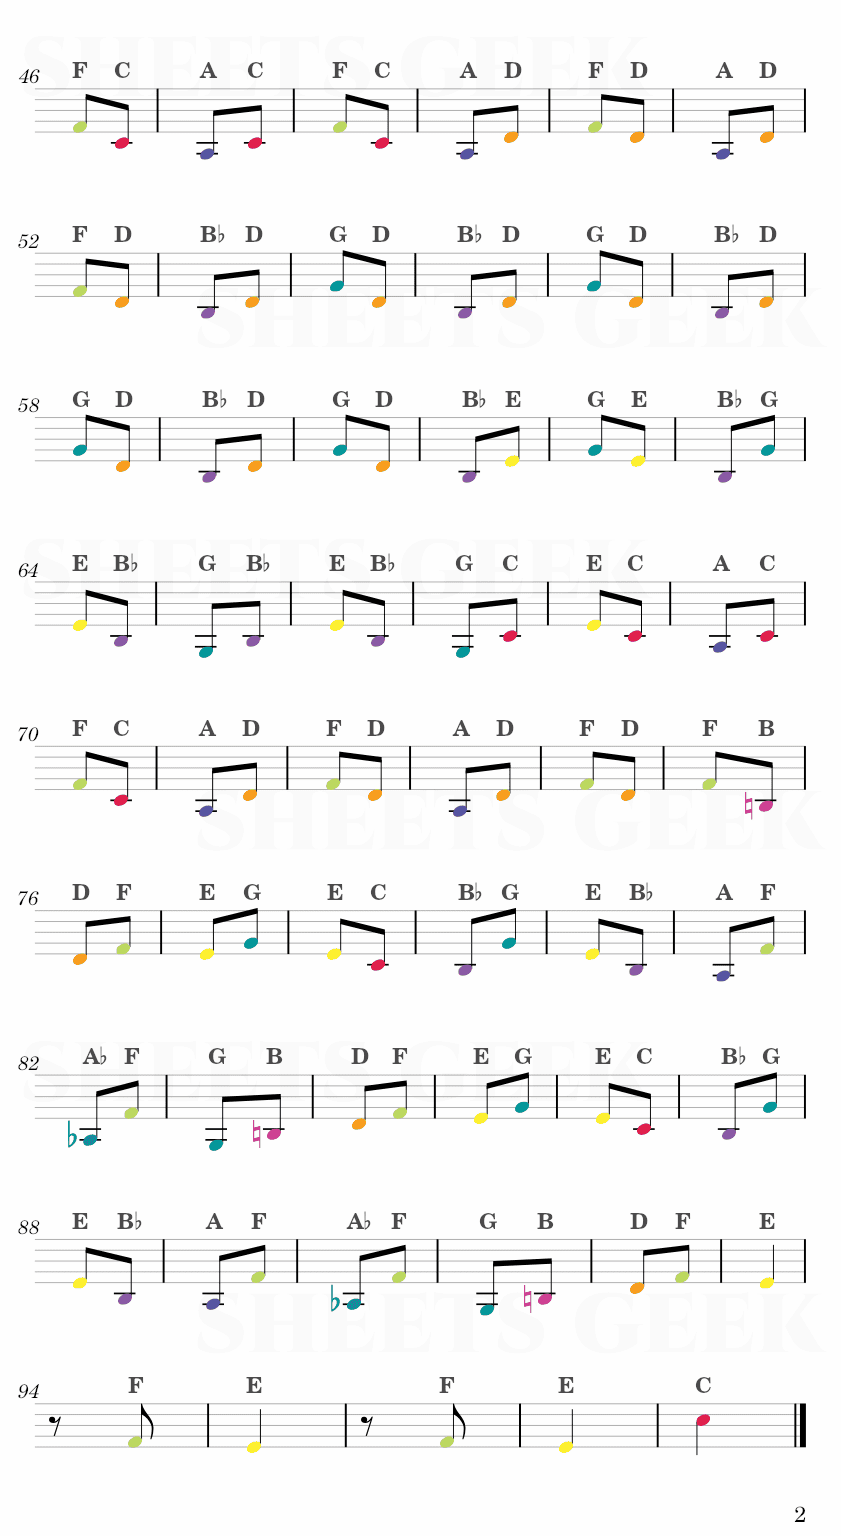 Violin Sonata No.5, Op.24 - Ludwig Van Beethoven Easy Sheet Music Free for piano, keyboard, flute, violin, sax, cello page 2